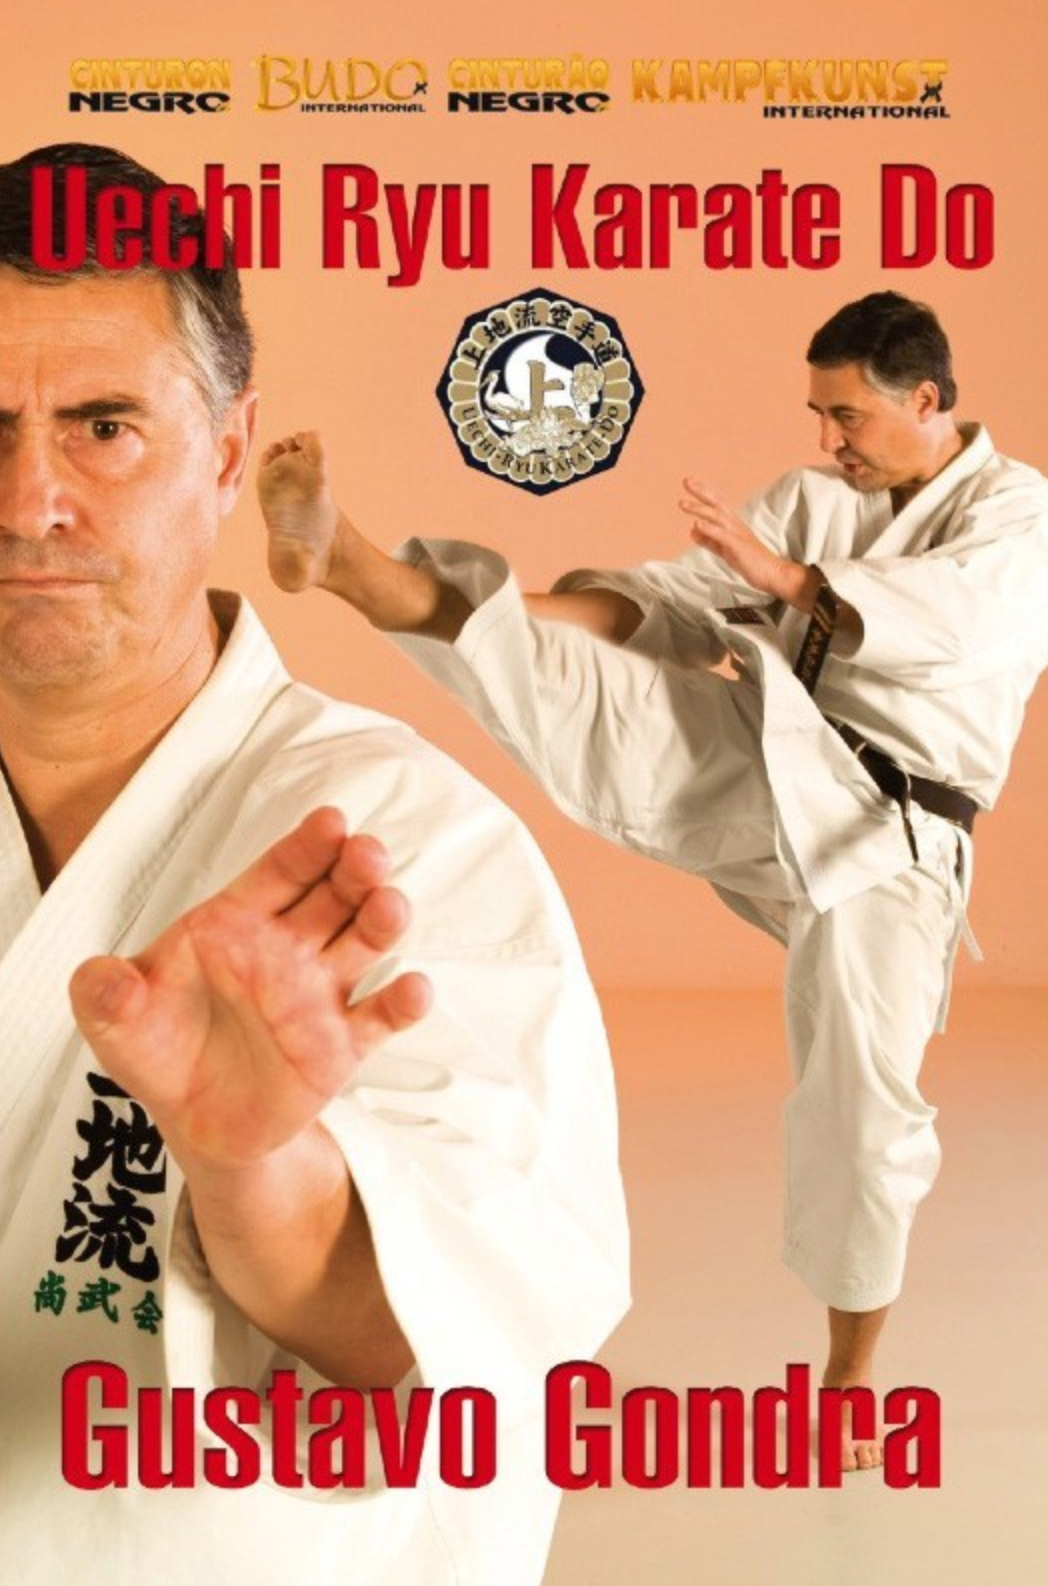 Uechi Ryu Karate DVD with Gustavo Gondra - Budovideos Inc